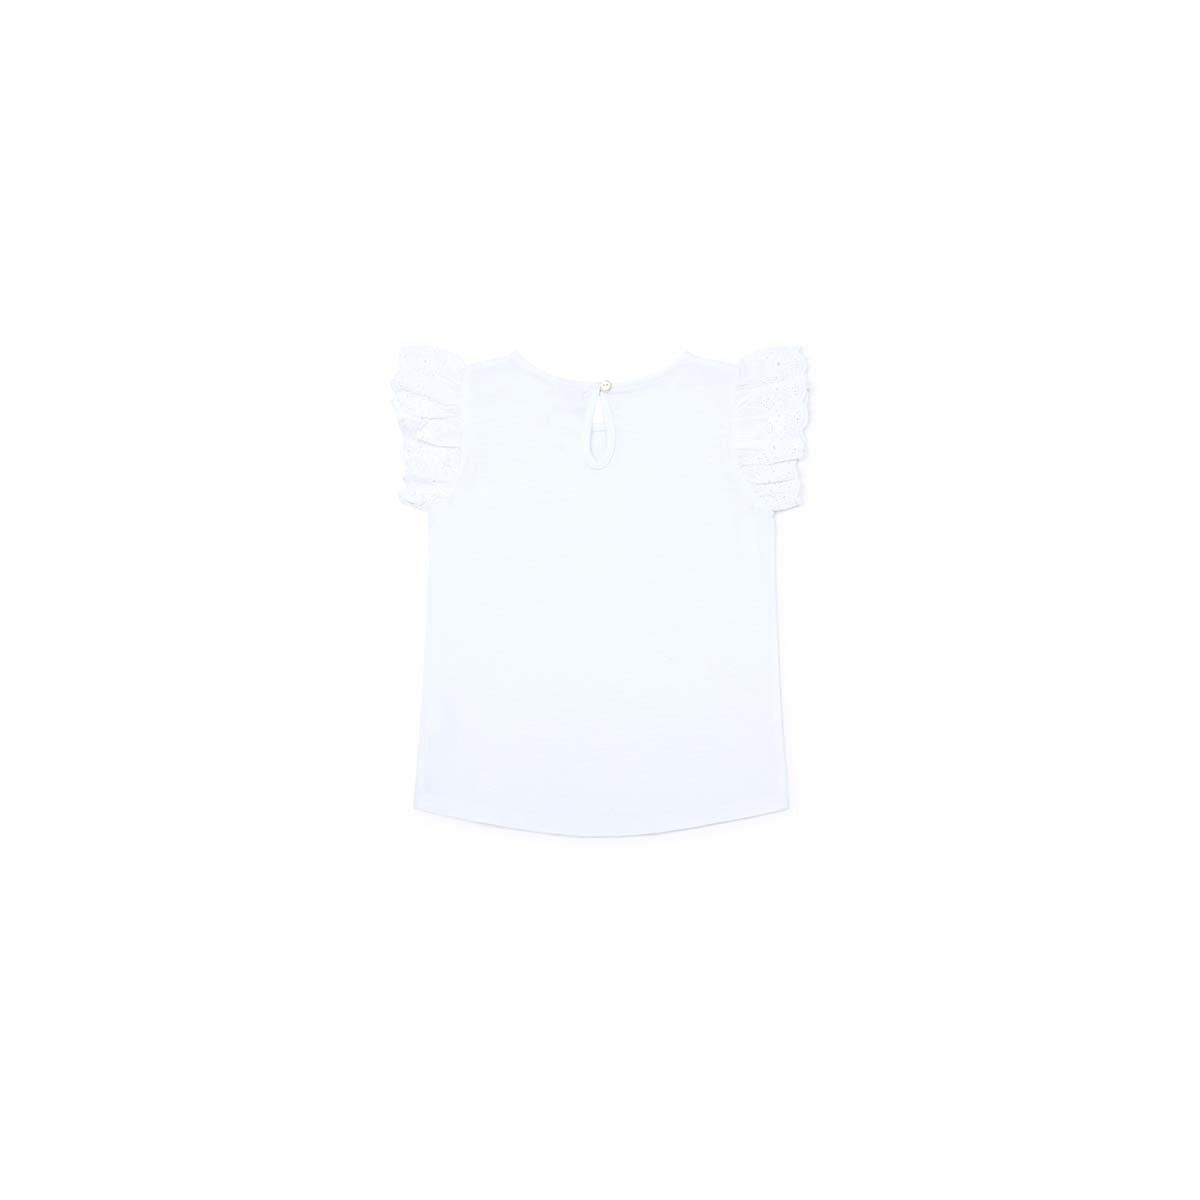 Girls White Cotton T-shirt